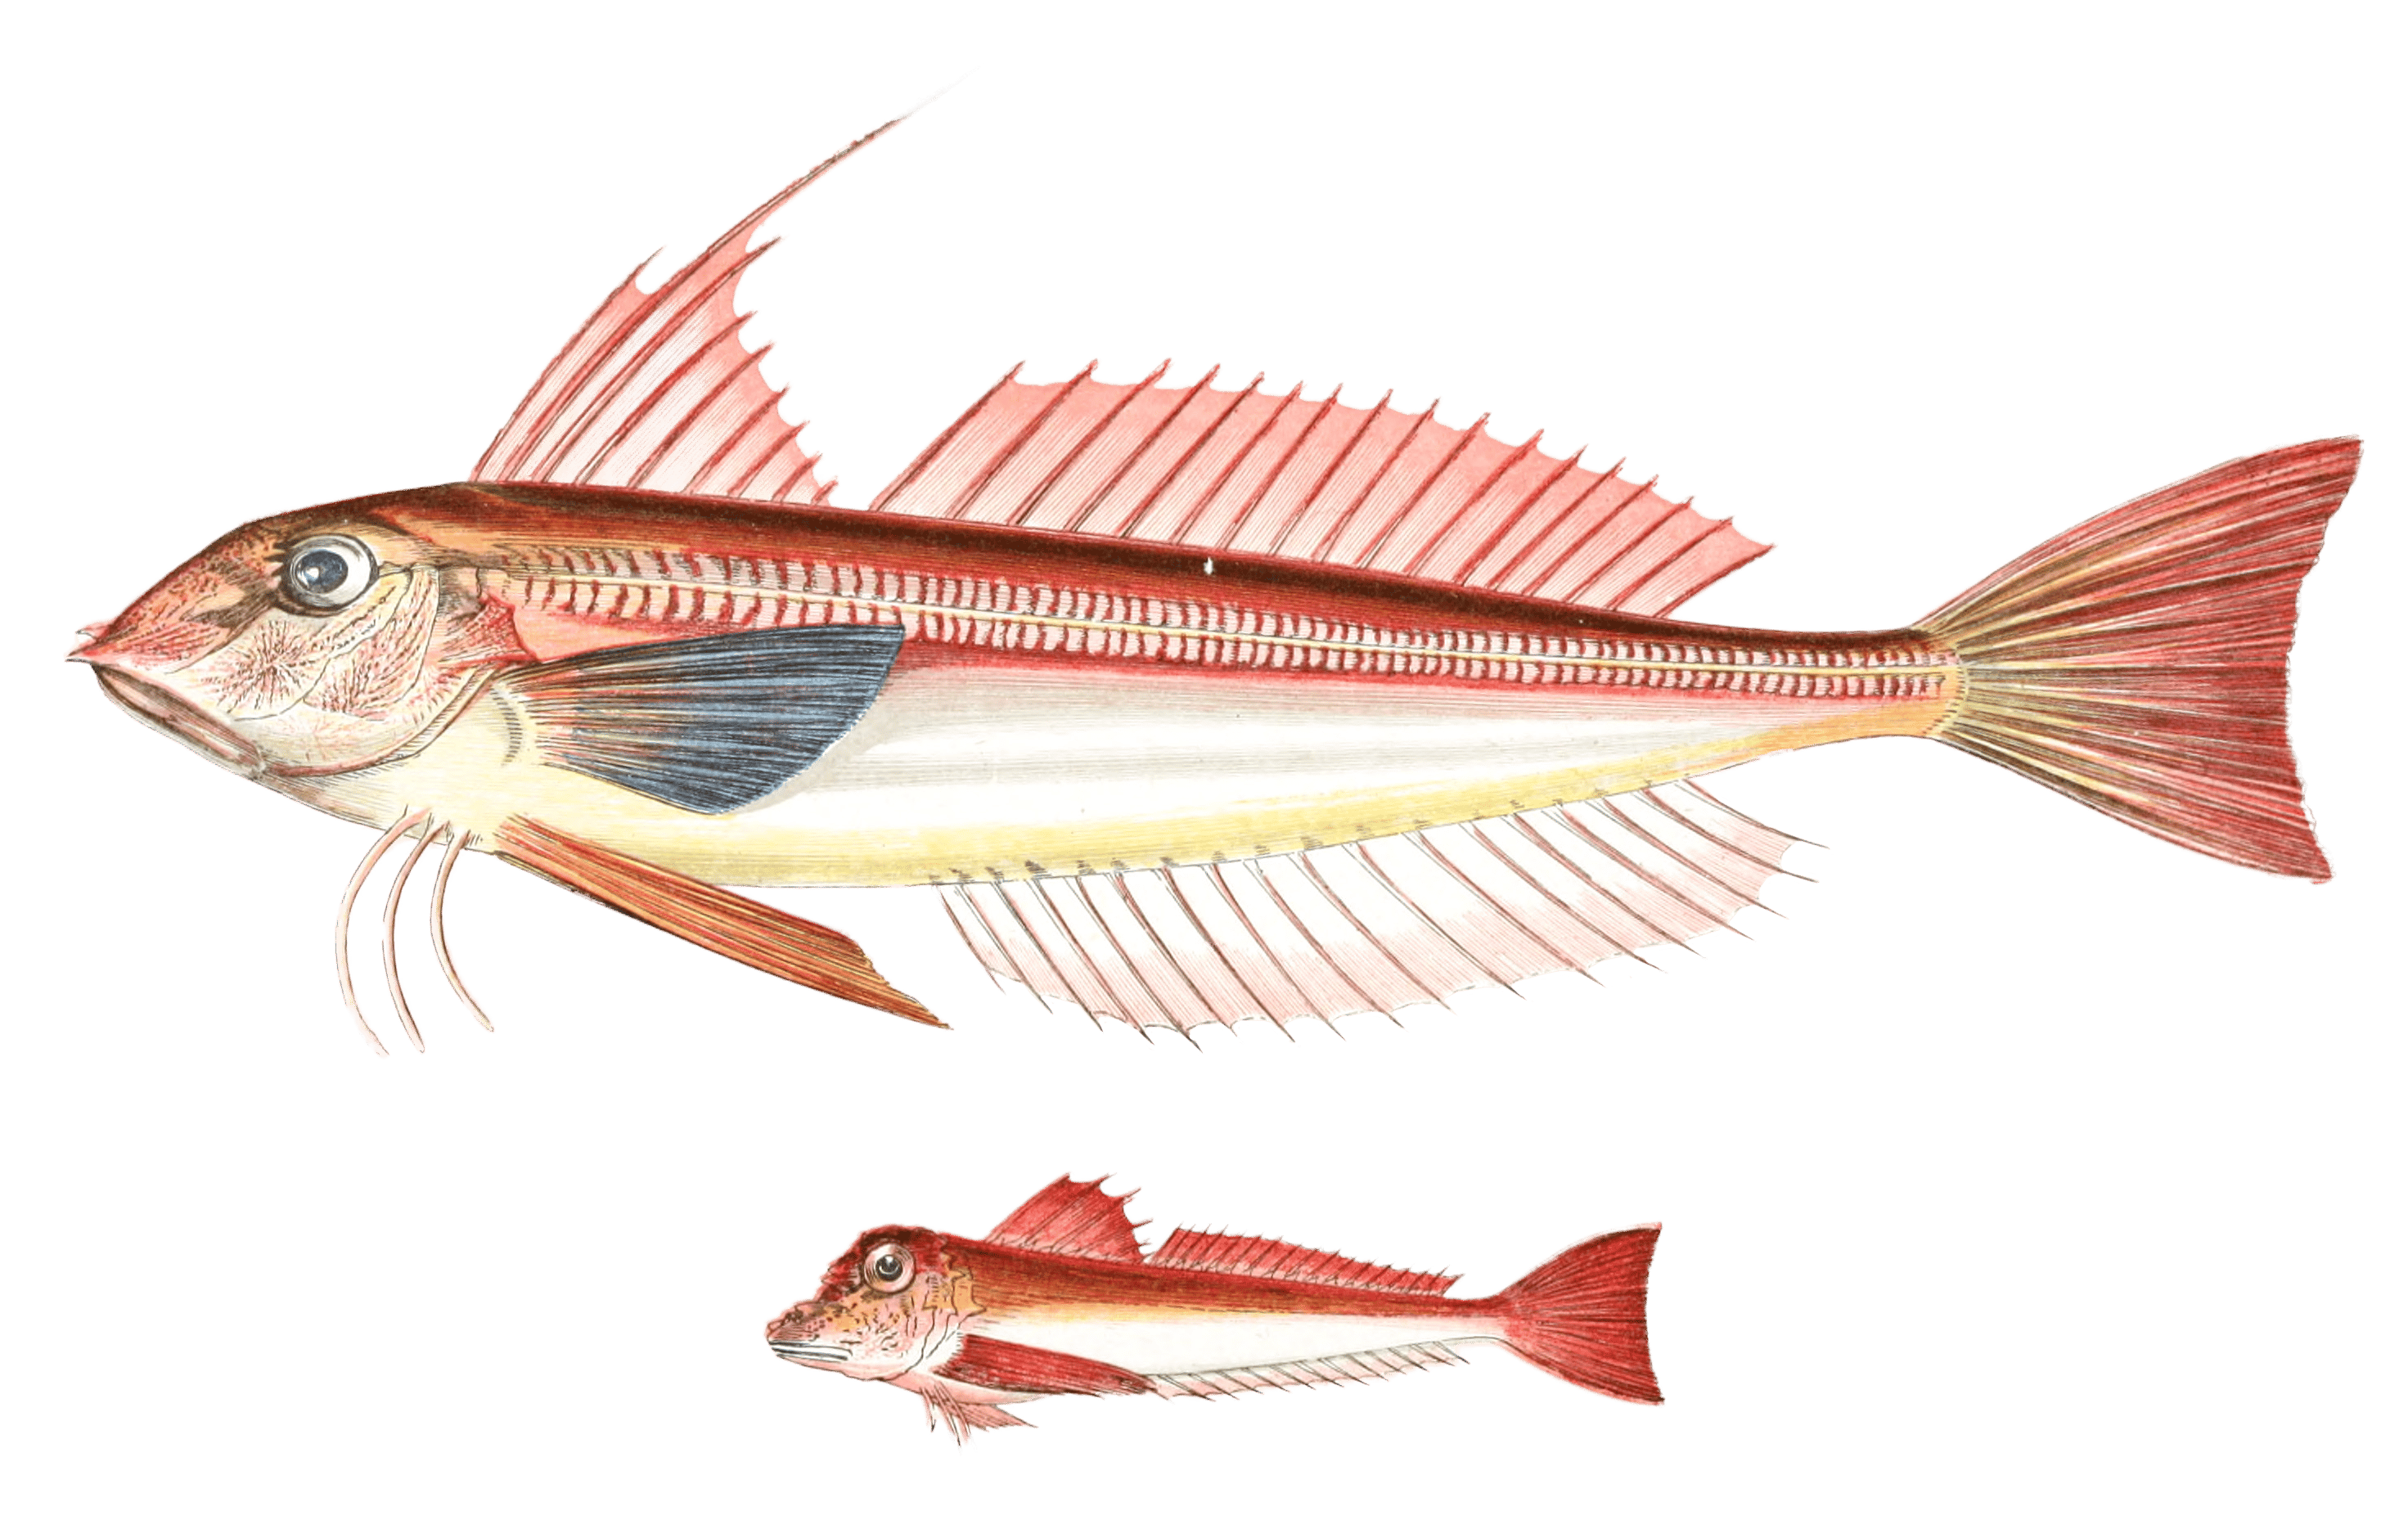 Gurnard Fish 2 Vintage Illustration